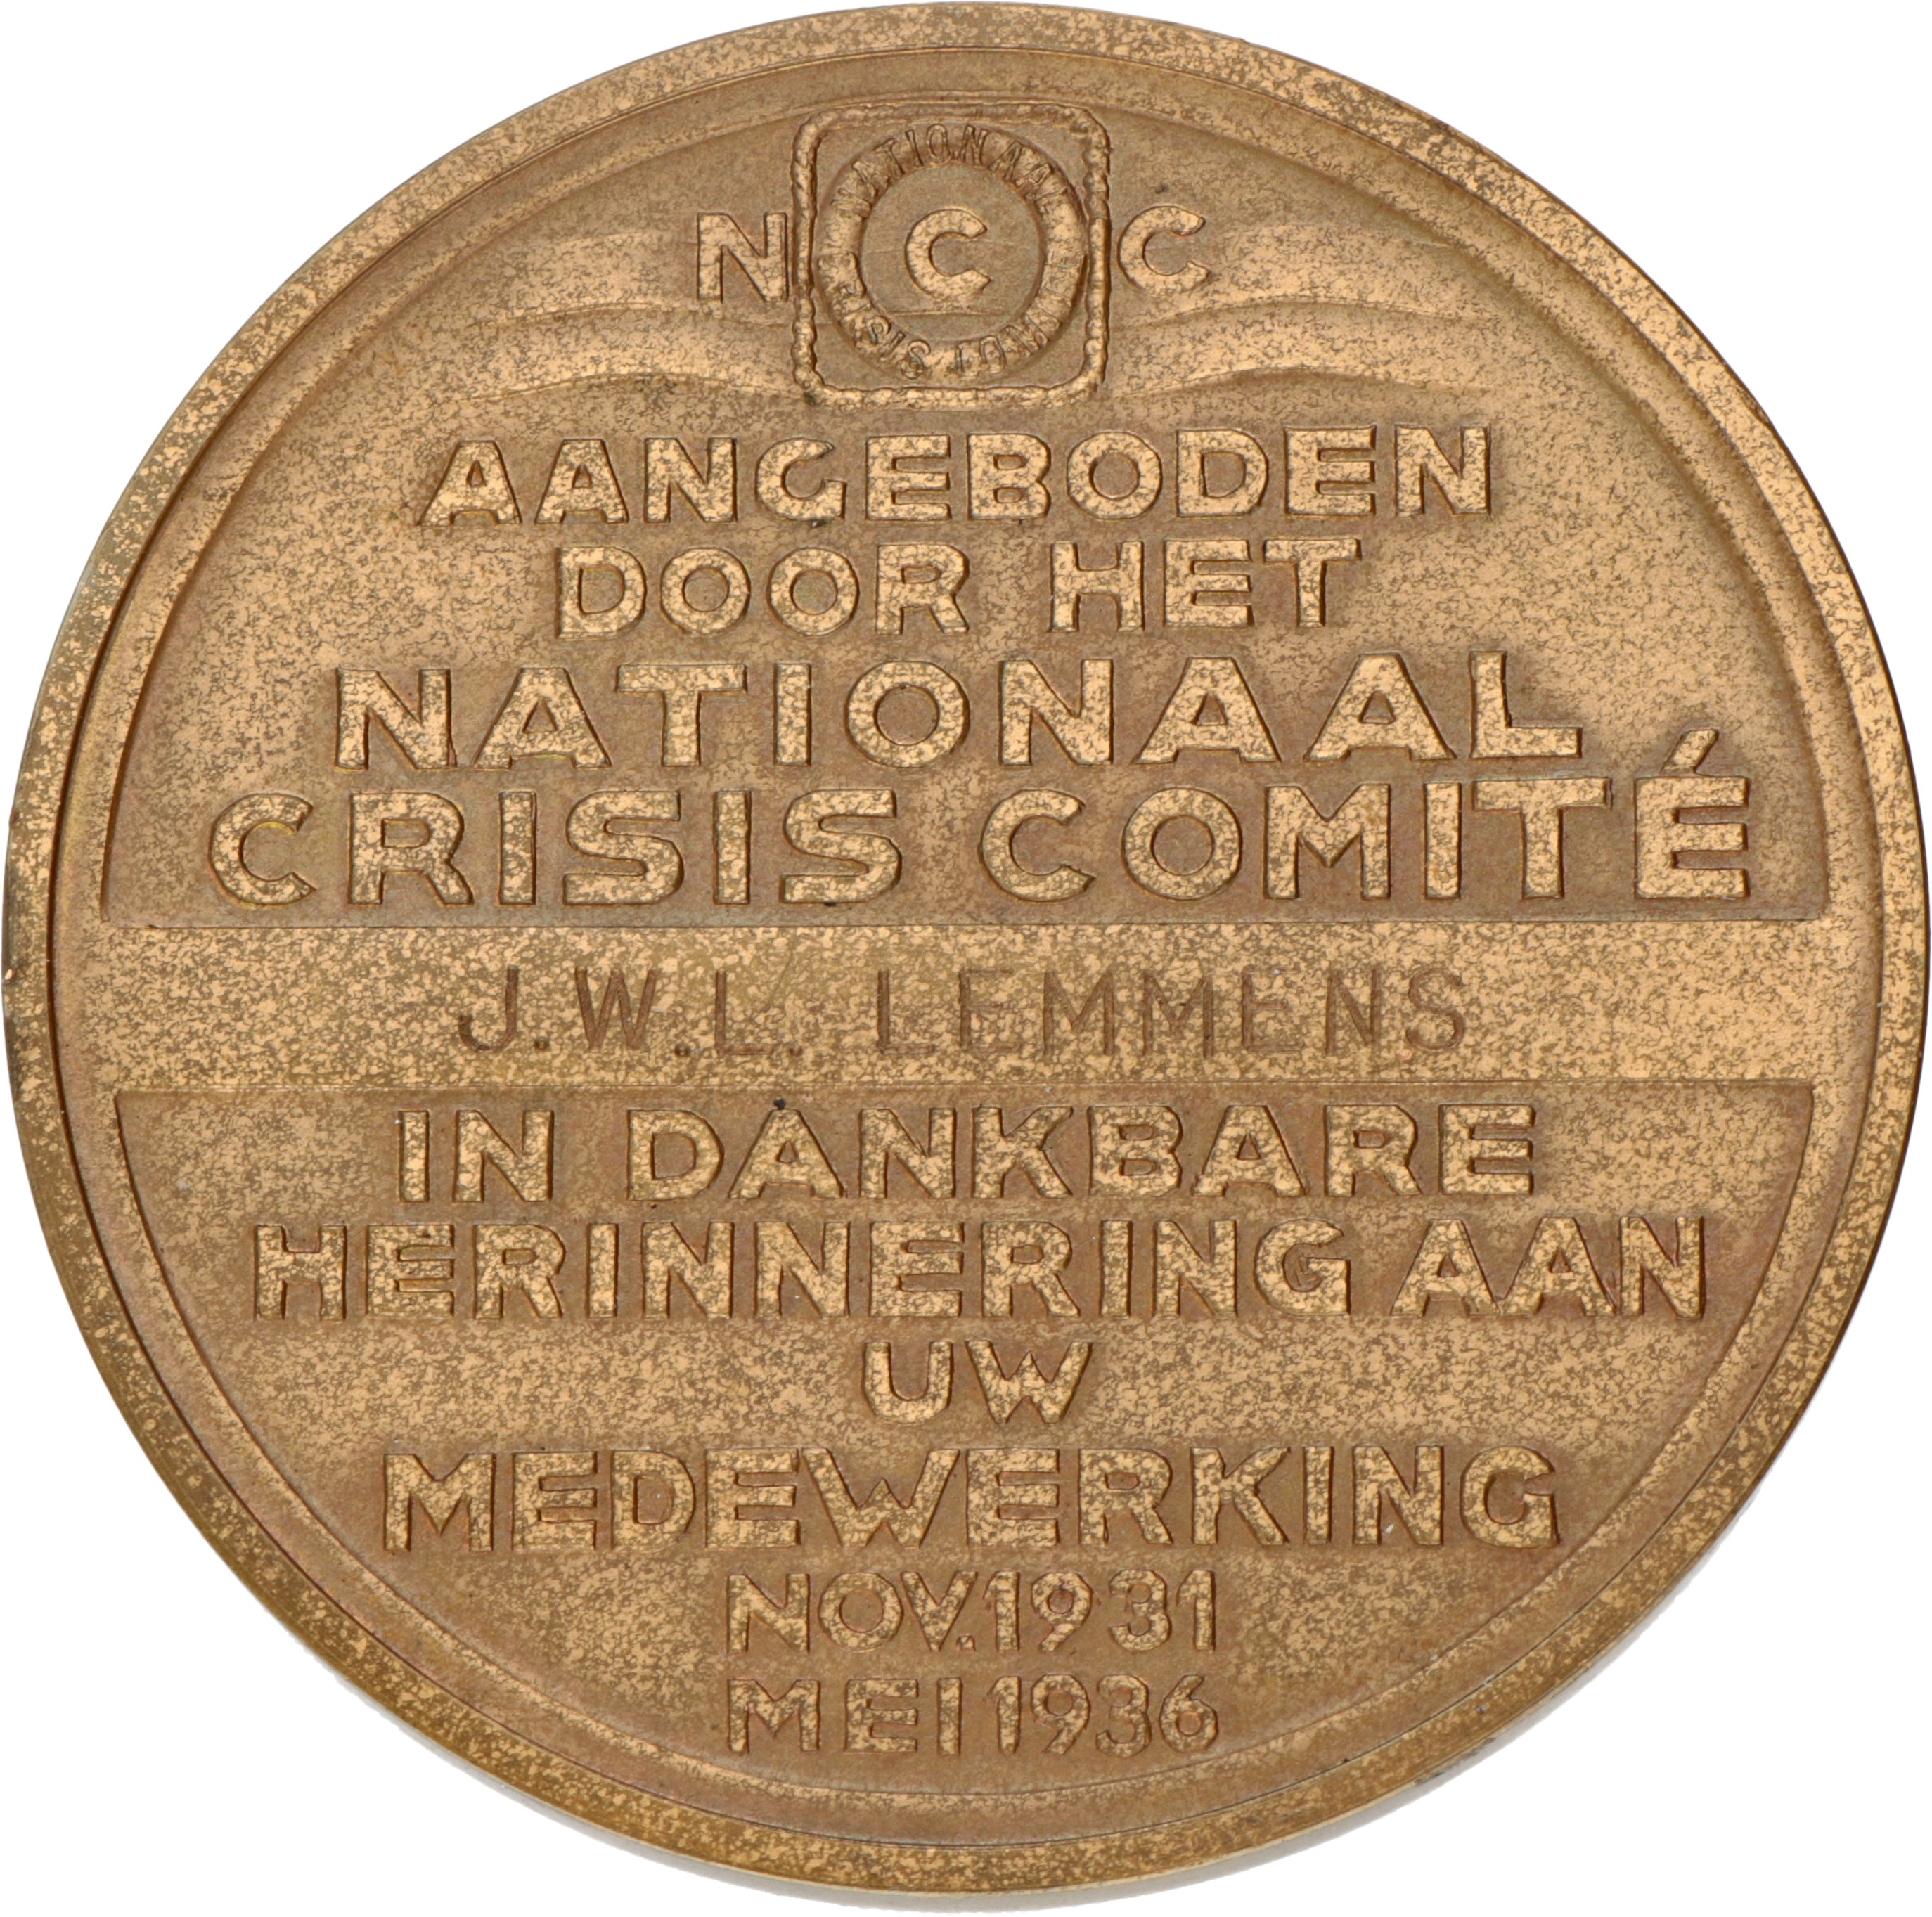 Nederland. 1936. Beloningspenning nationaal crisis comité.